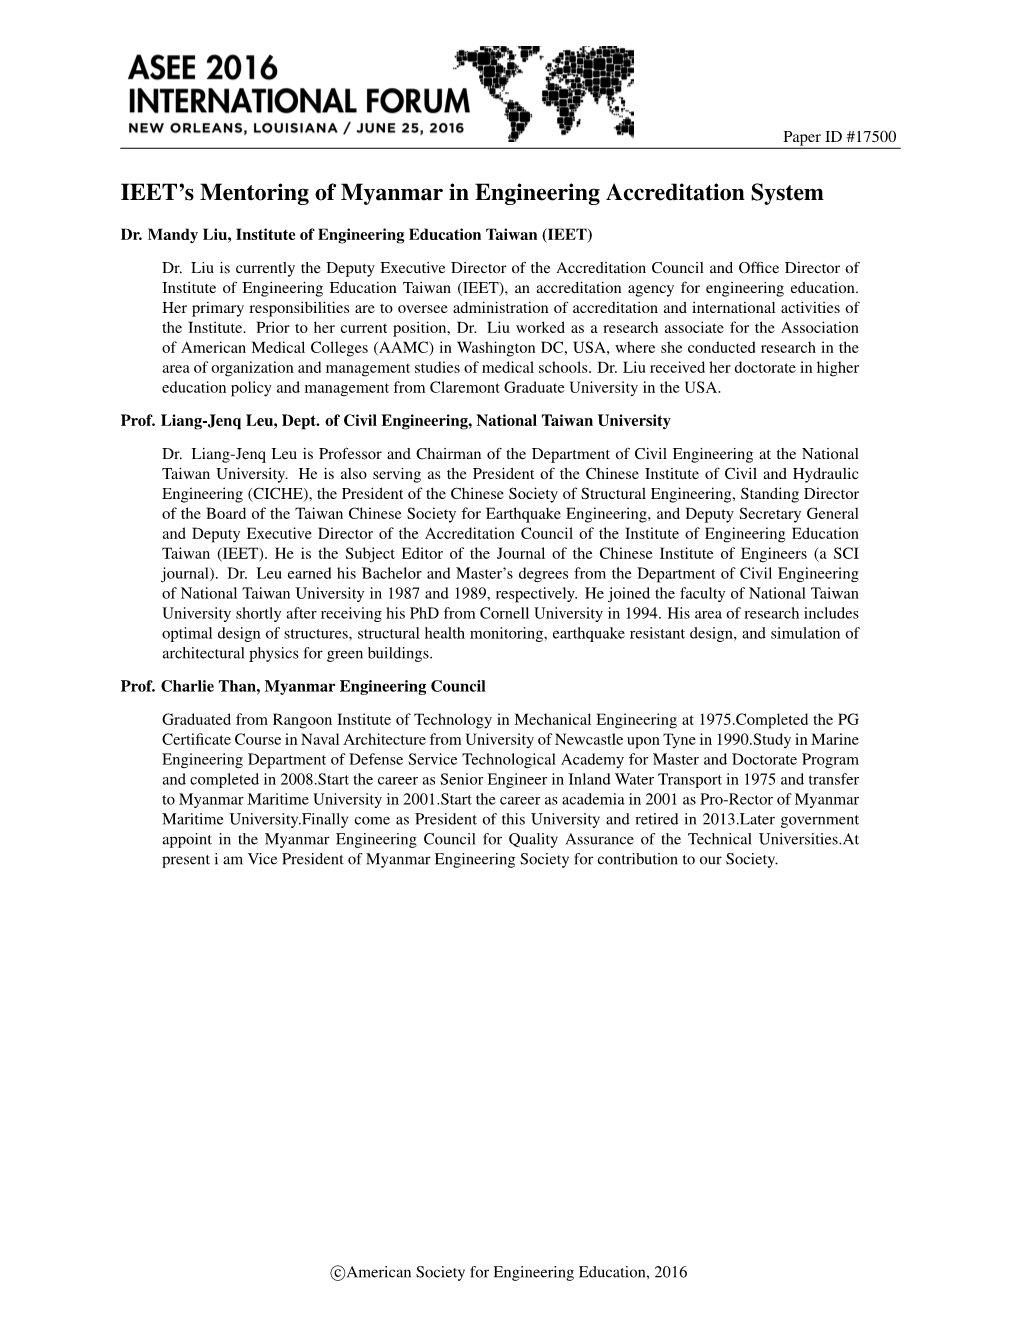 IEET's Mentoring of Myanmar in Engineering Accreditation System